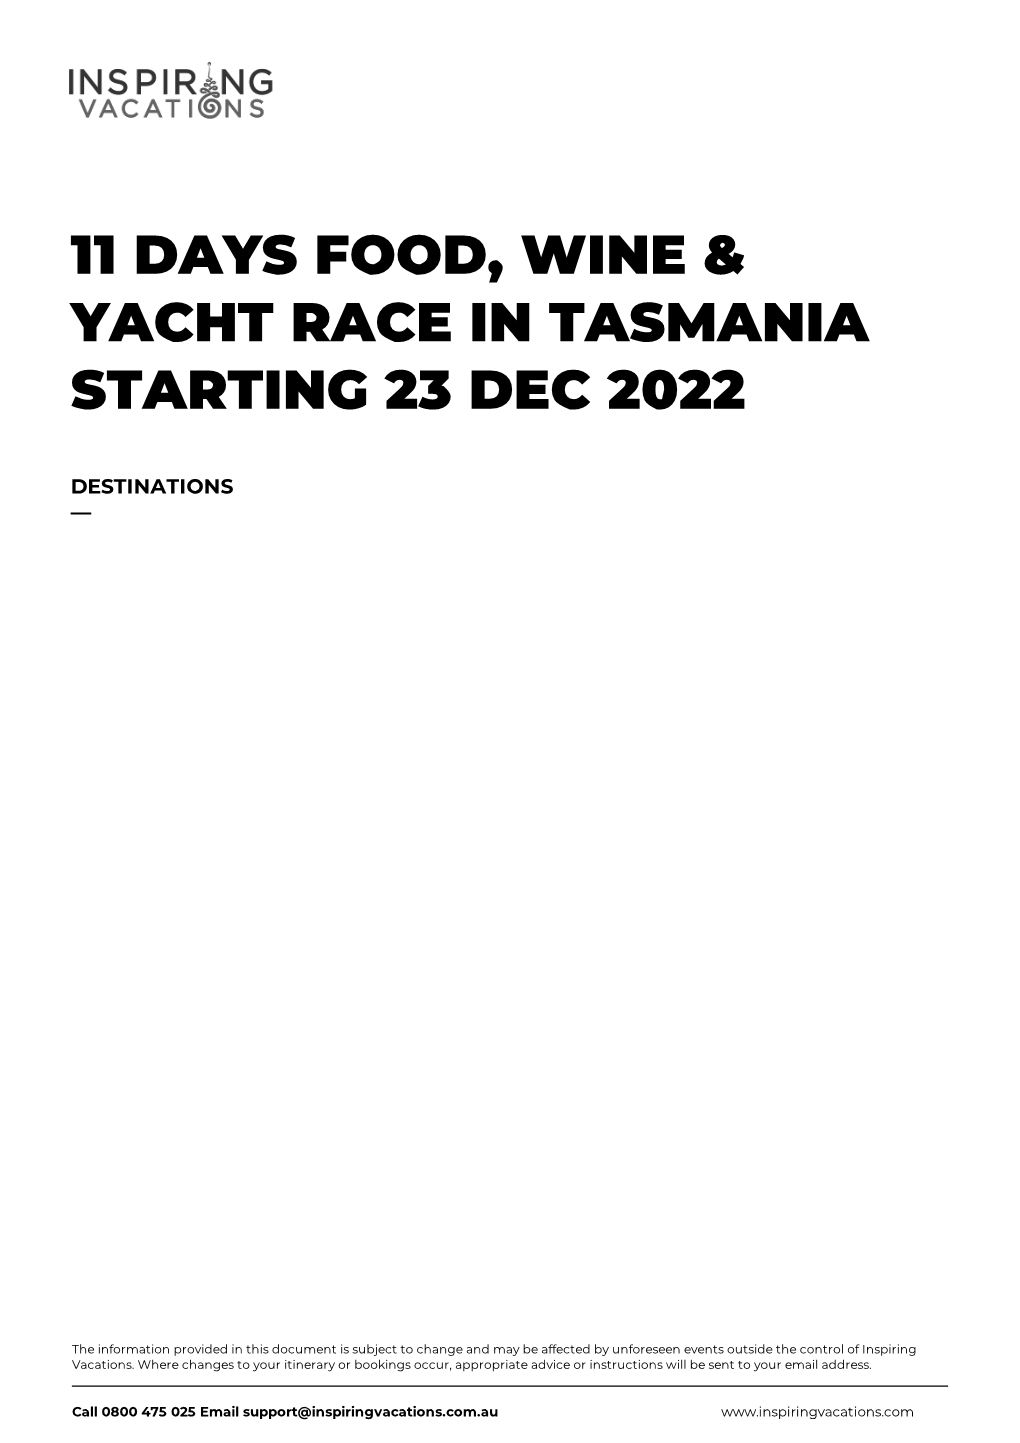 11 Days Food, Wine & Yacht Race in Tasmania Starting